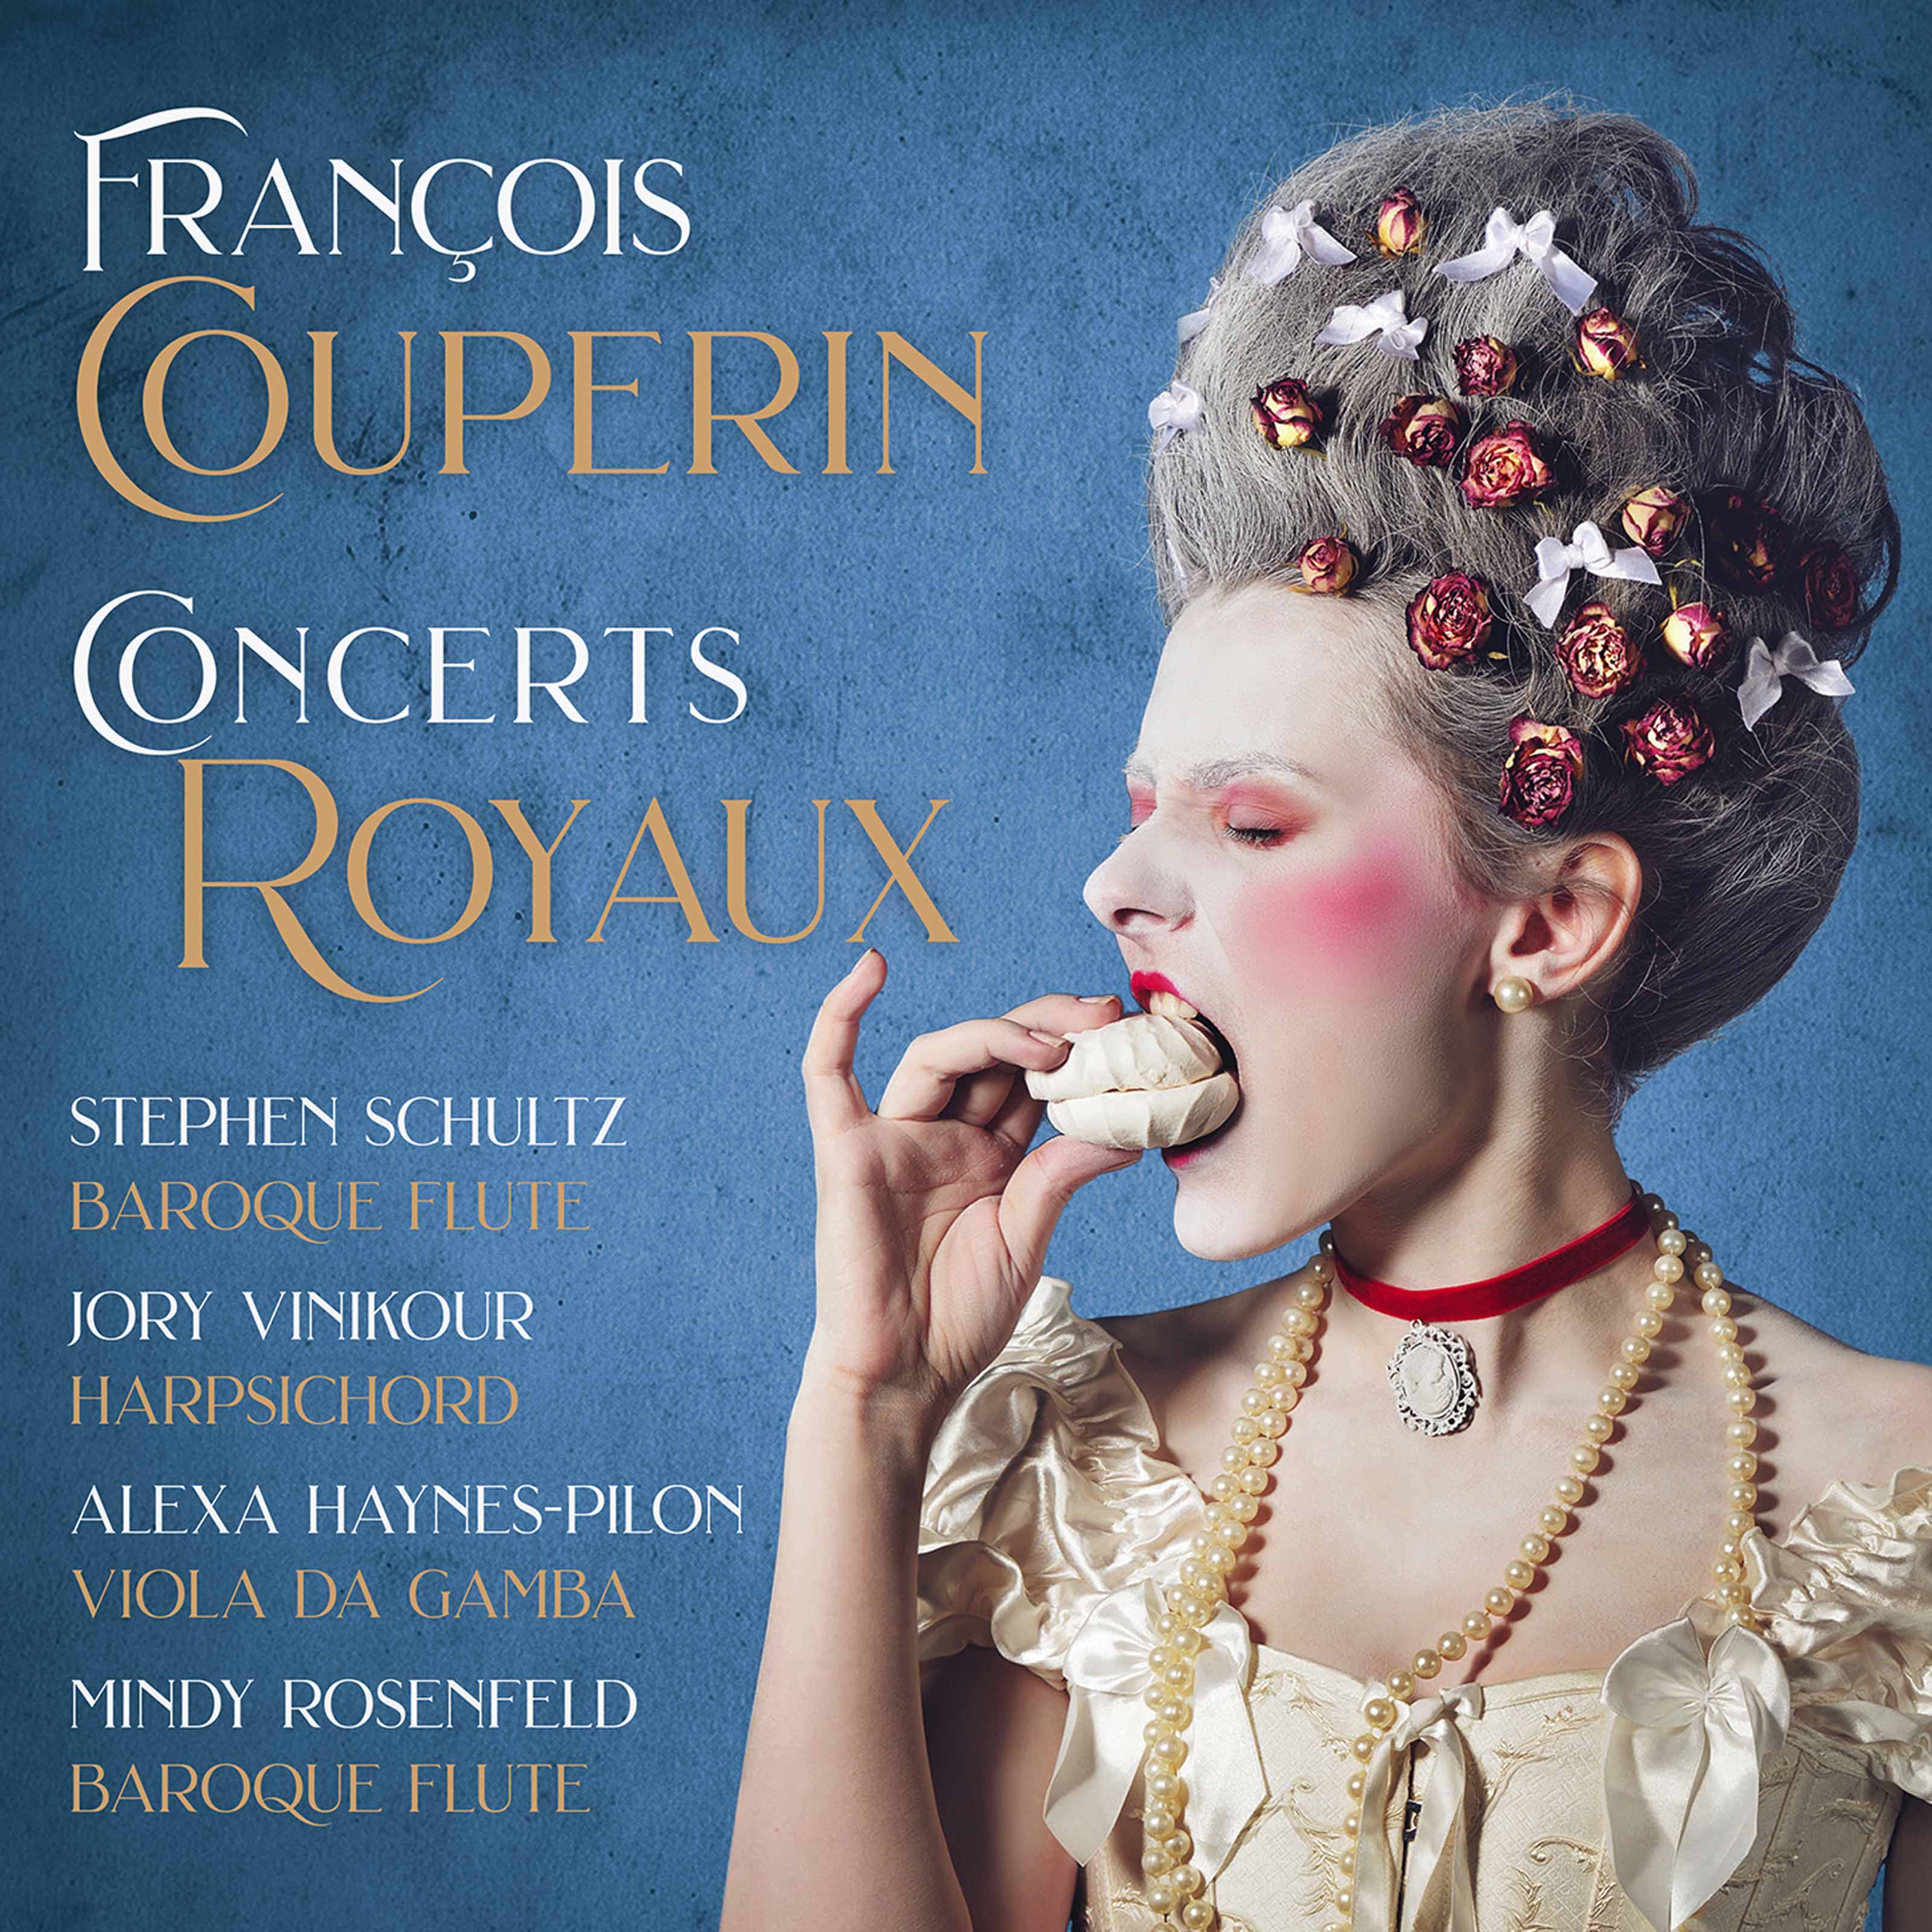 Franois Couperin - CONCERTS ROYAUX (Music & Arts, 2021)